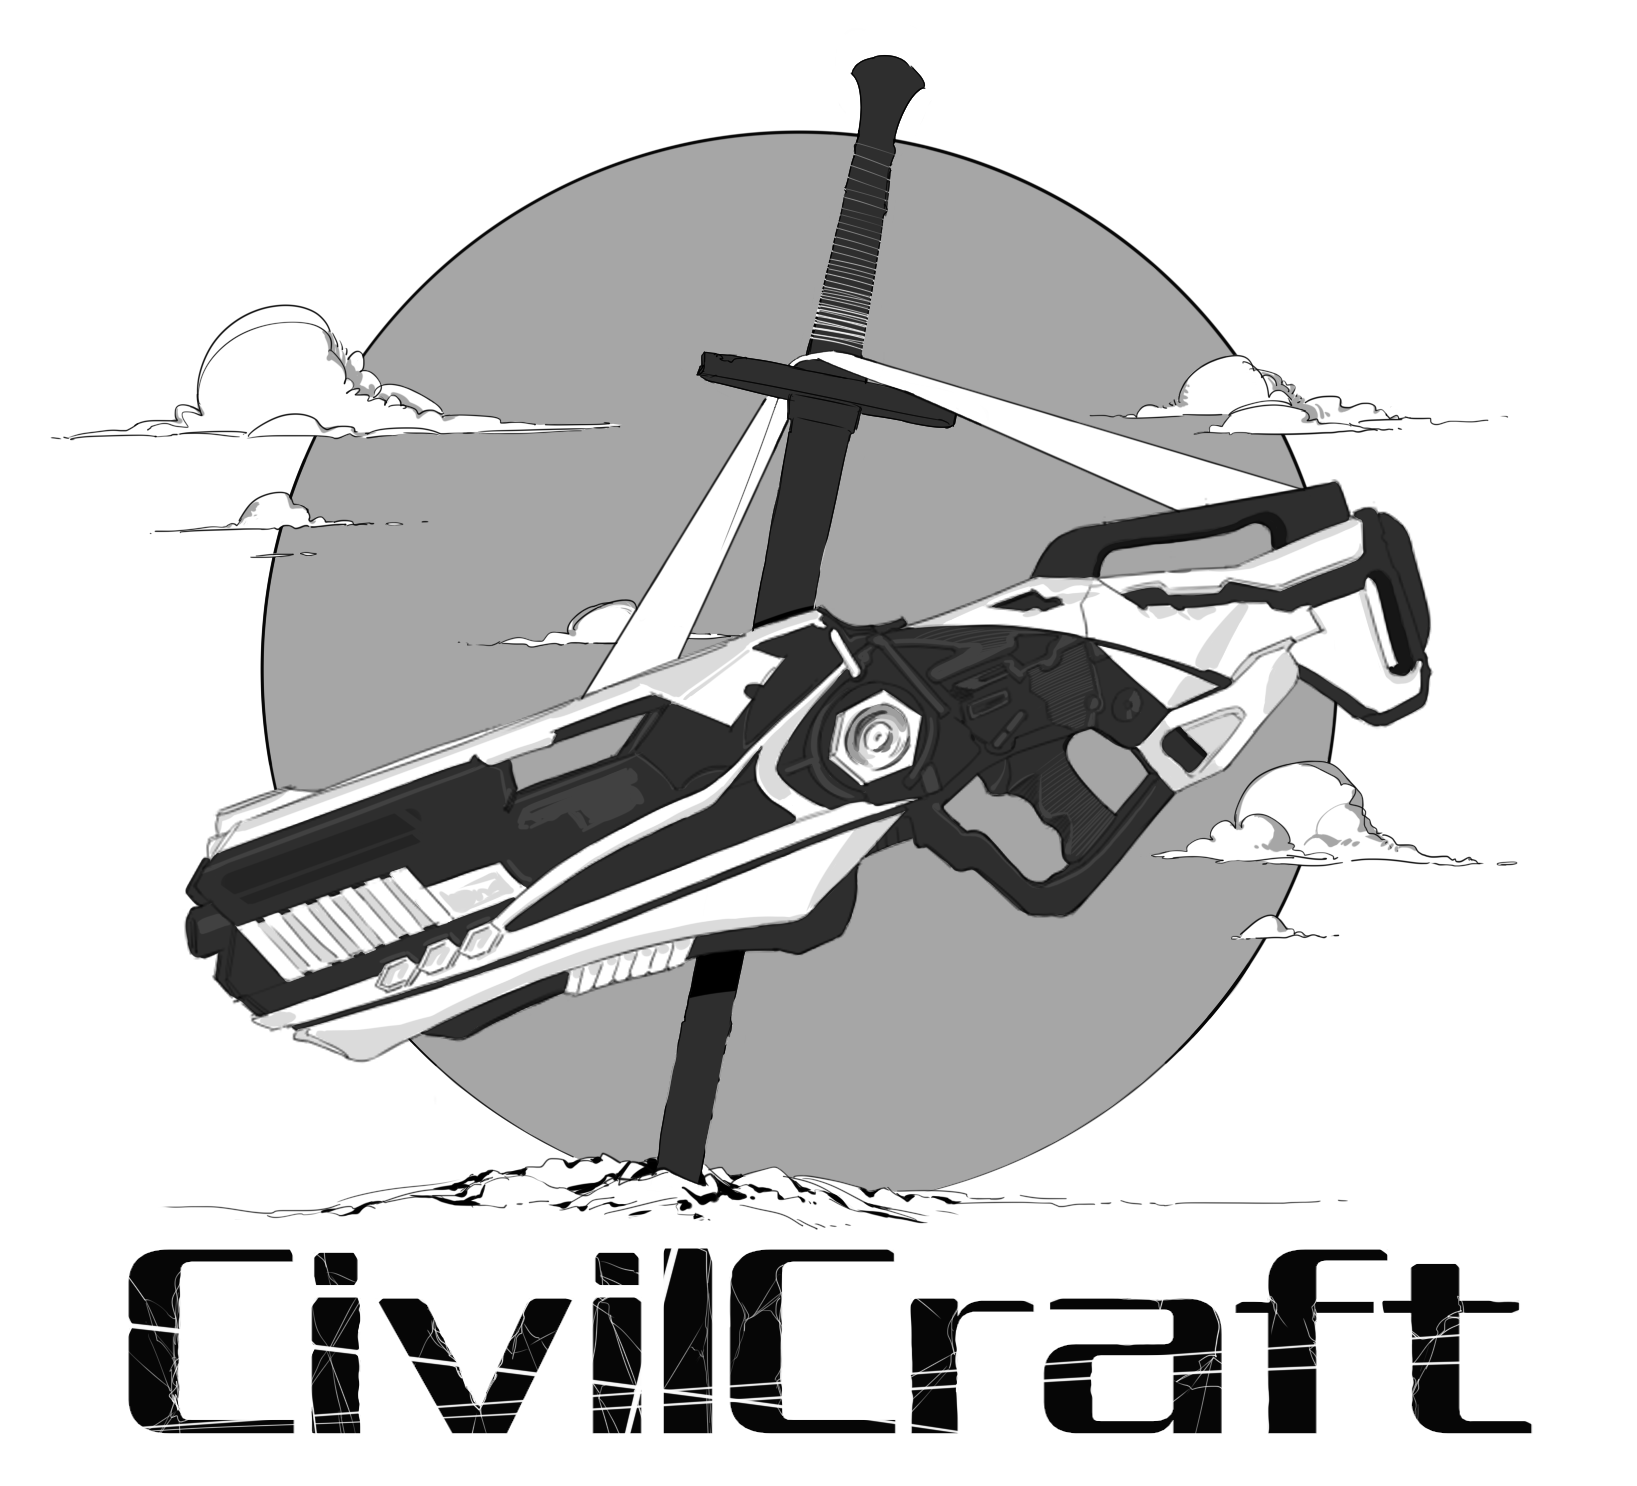 Civilcraft文明创造